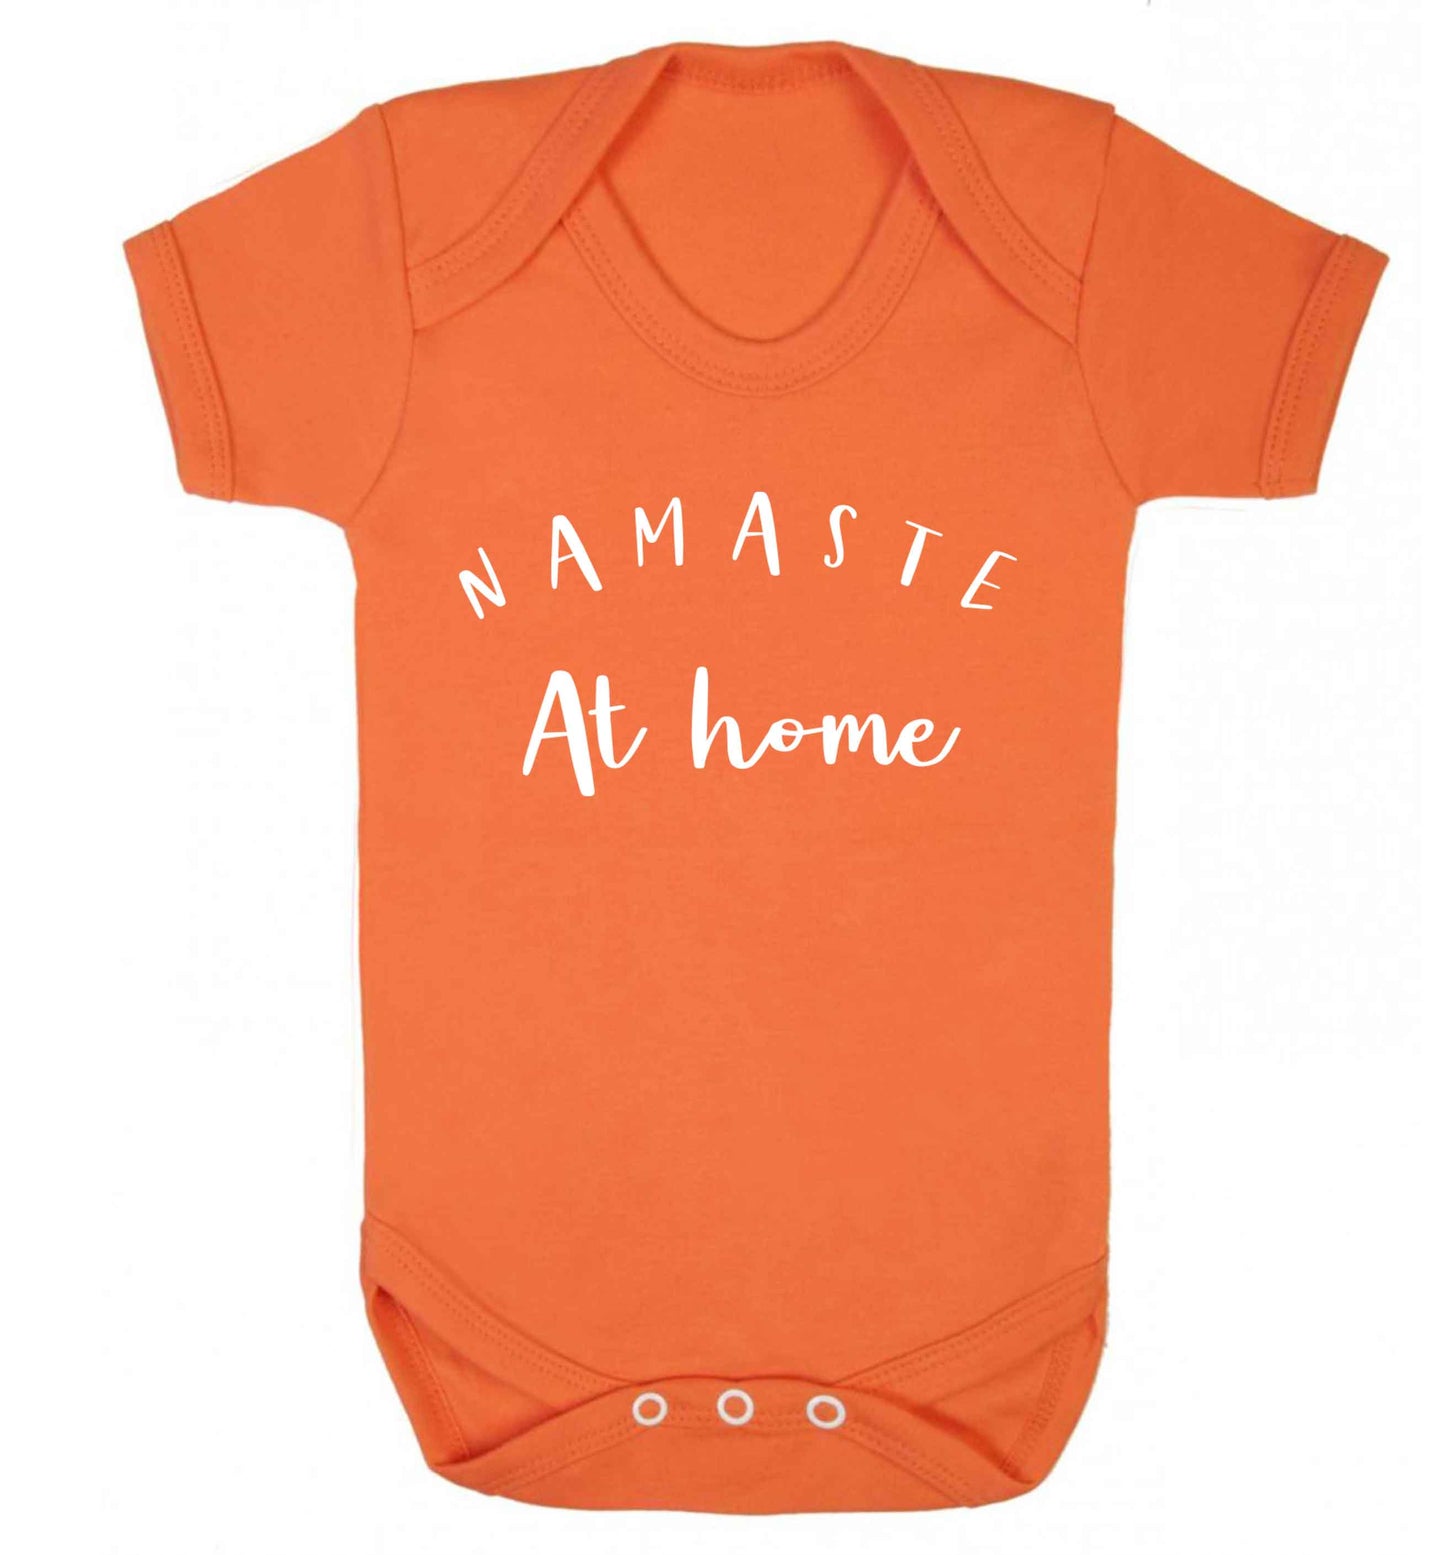 Namaste at home Baby Vest orange 18-24 months